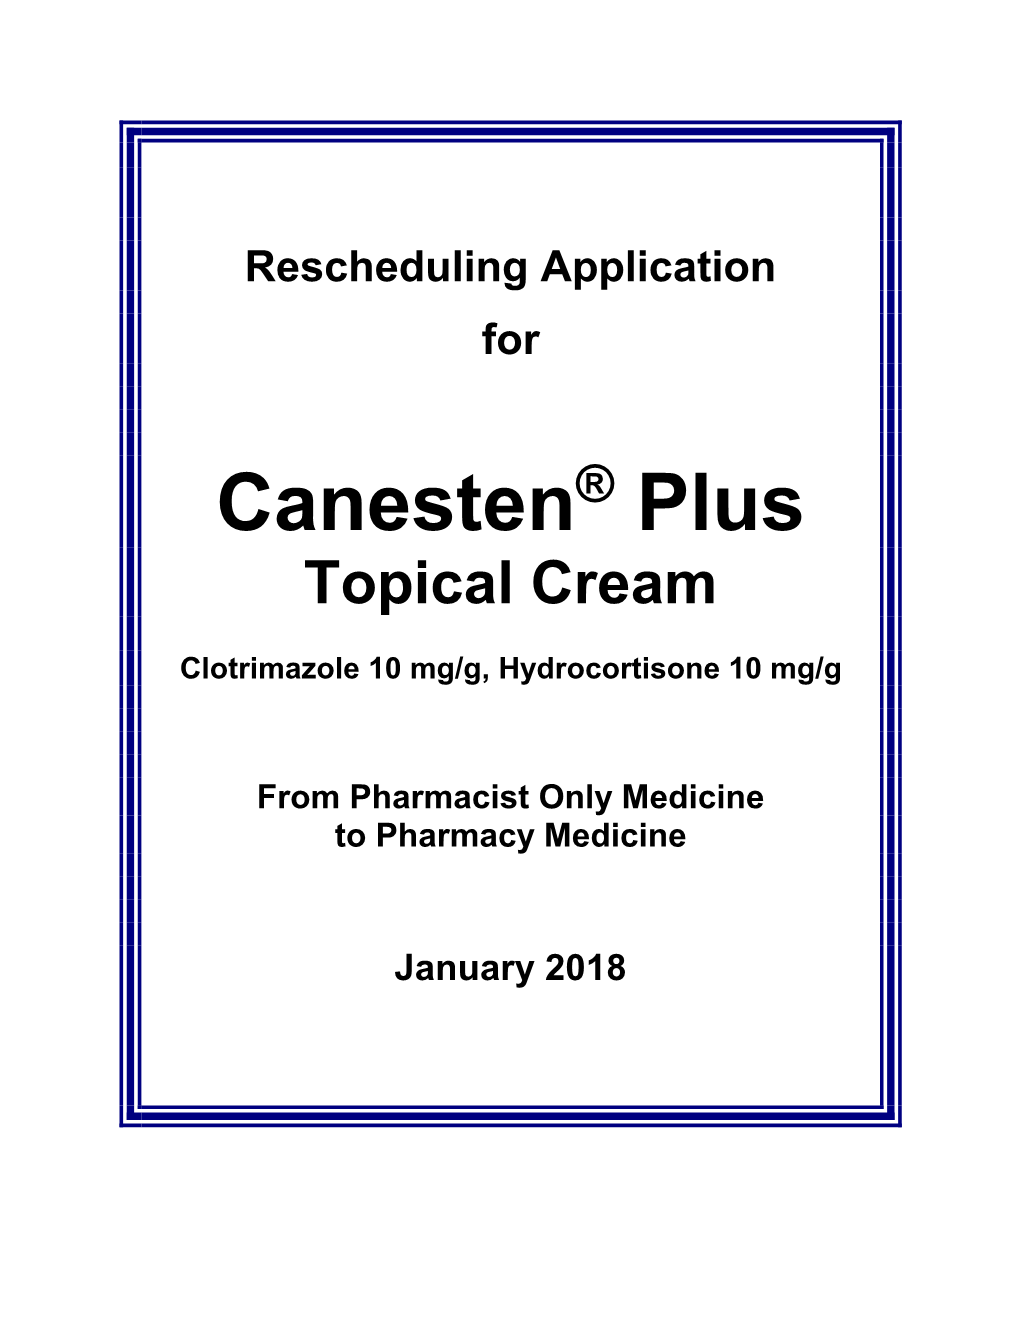 Canesten Plus Rescheduling Application January 2018